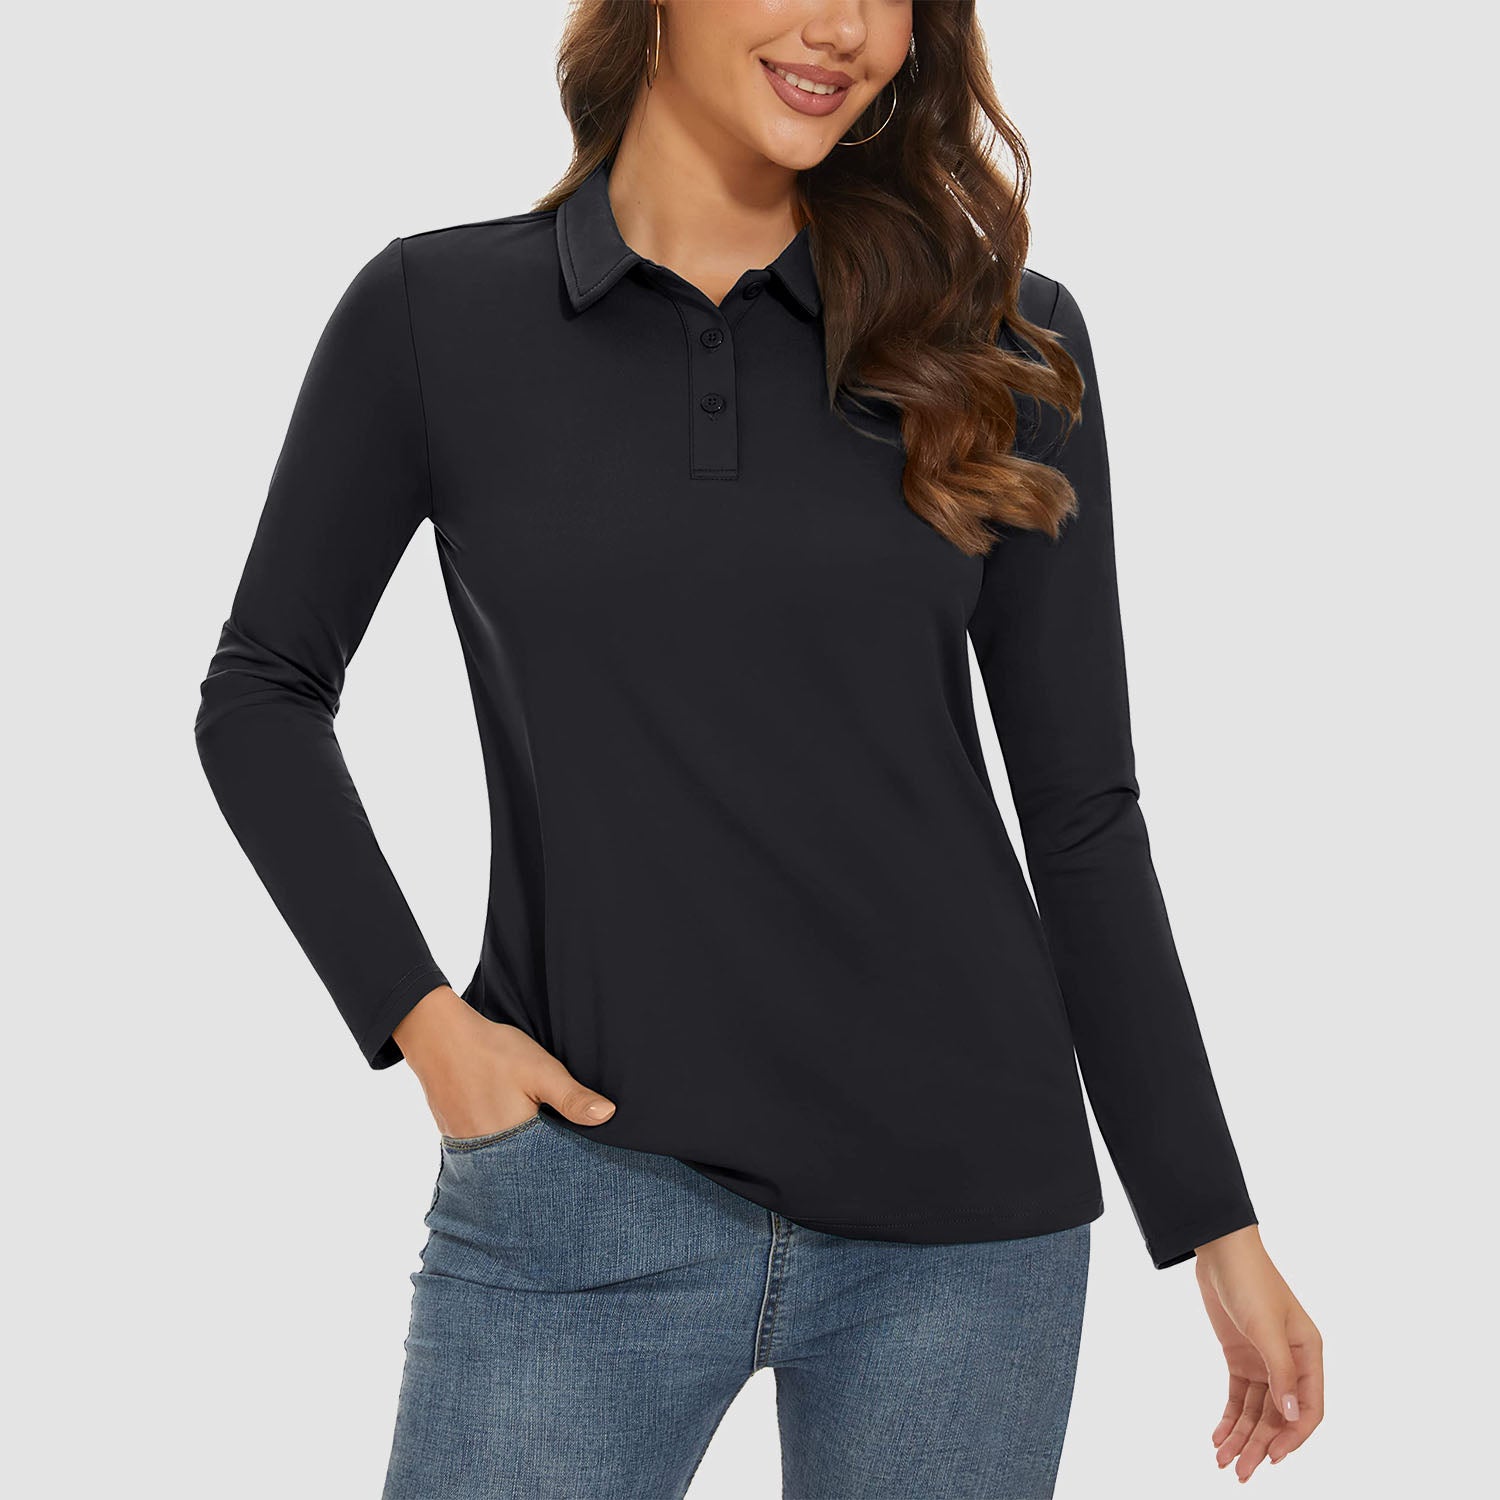 Women's Long Sleeve Golf Shirts UPF 50+ Polo Moisture Wicking Casual Shirt for Sports